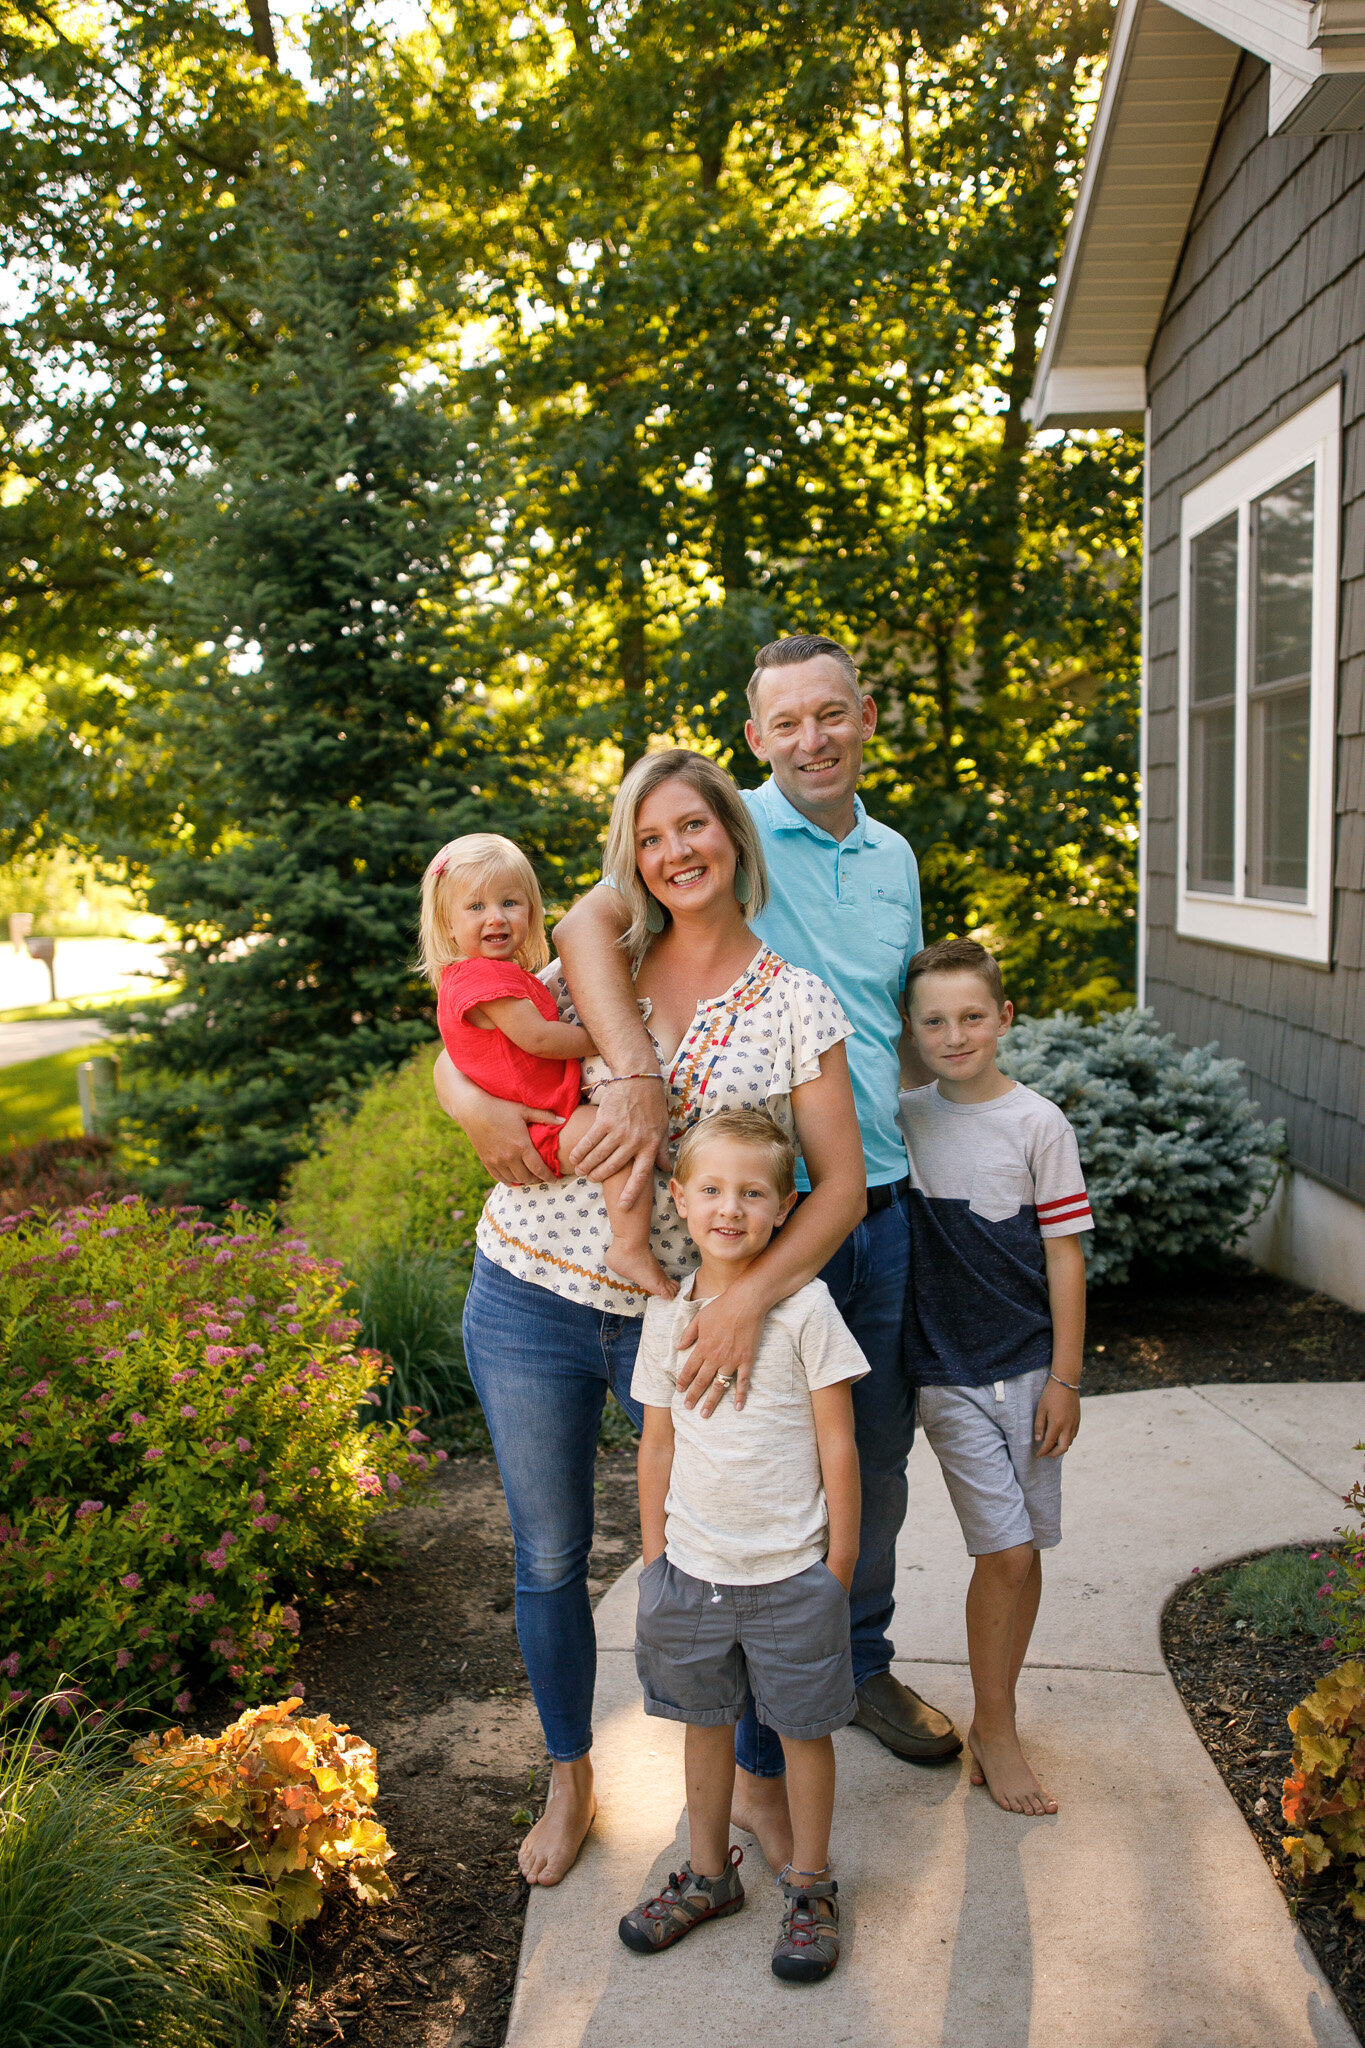 Clabuesch Family - Grand Rapids Family Photographer - Grand Rapids Lifestyle Photographer - Jessica Darling - J Darling Photo007.jpg